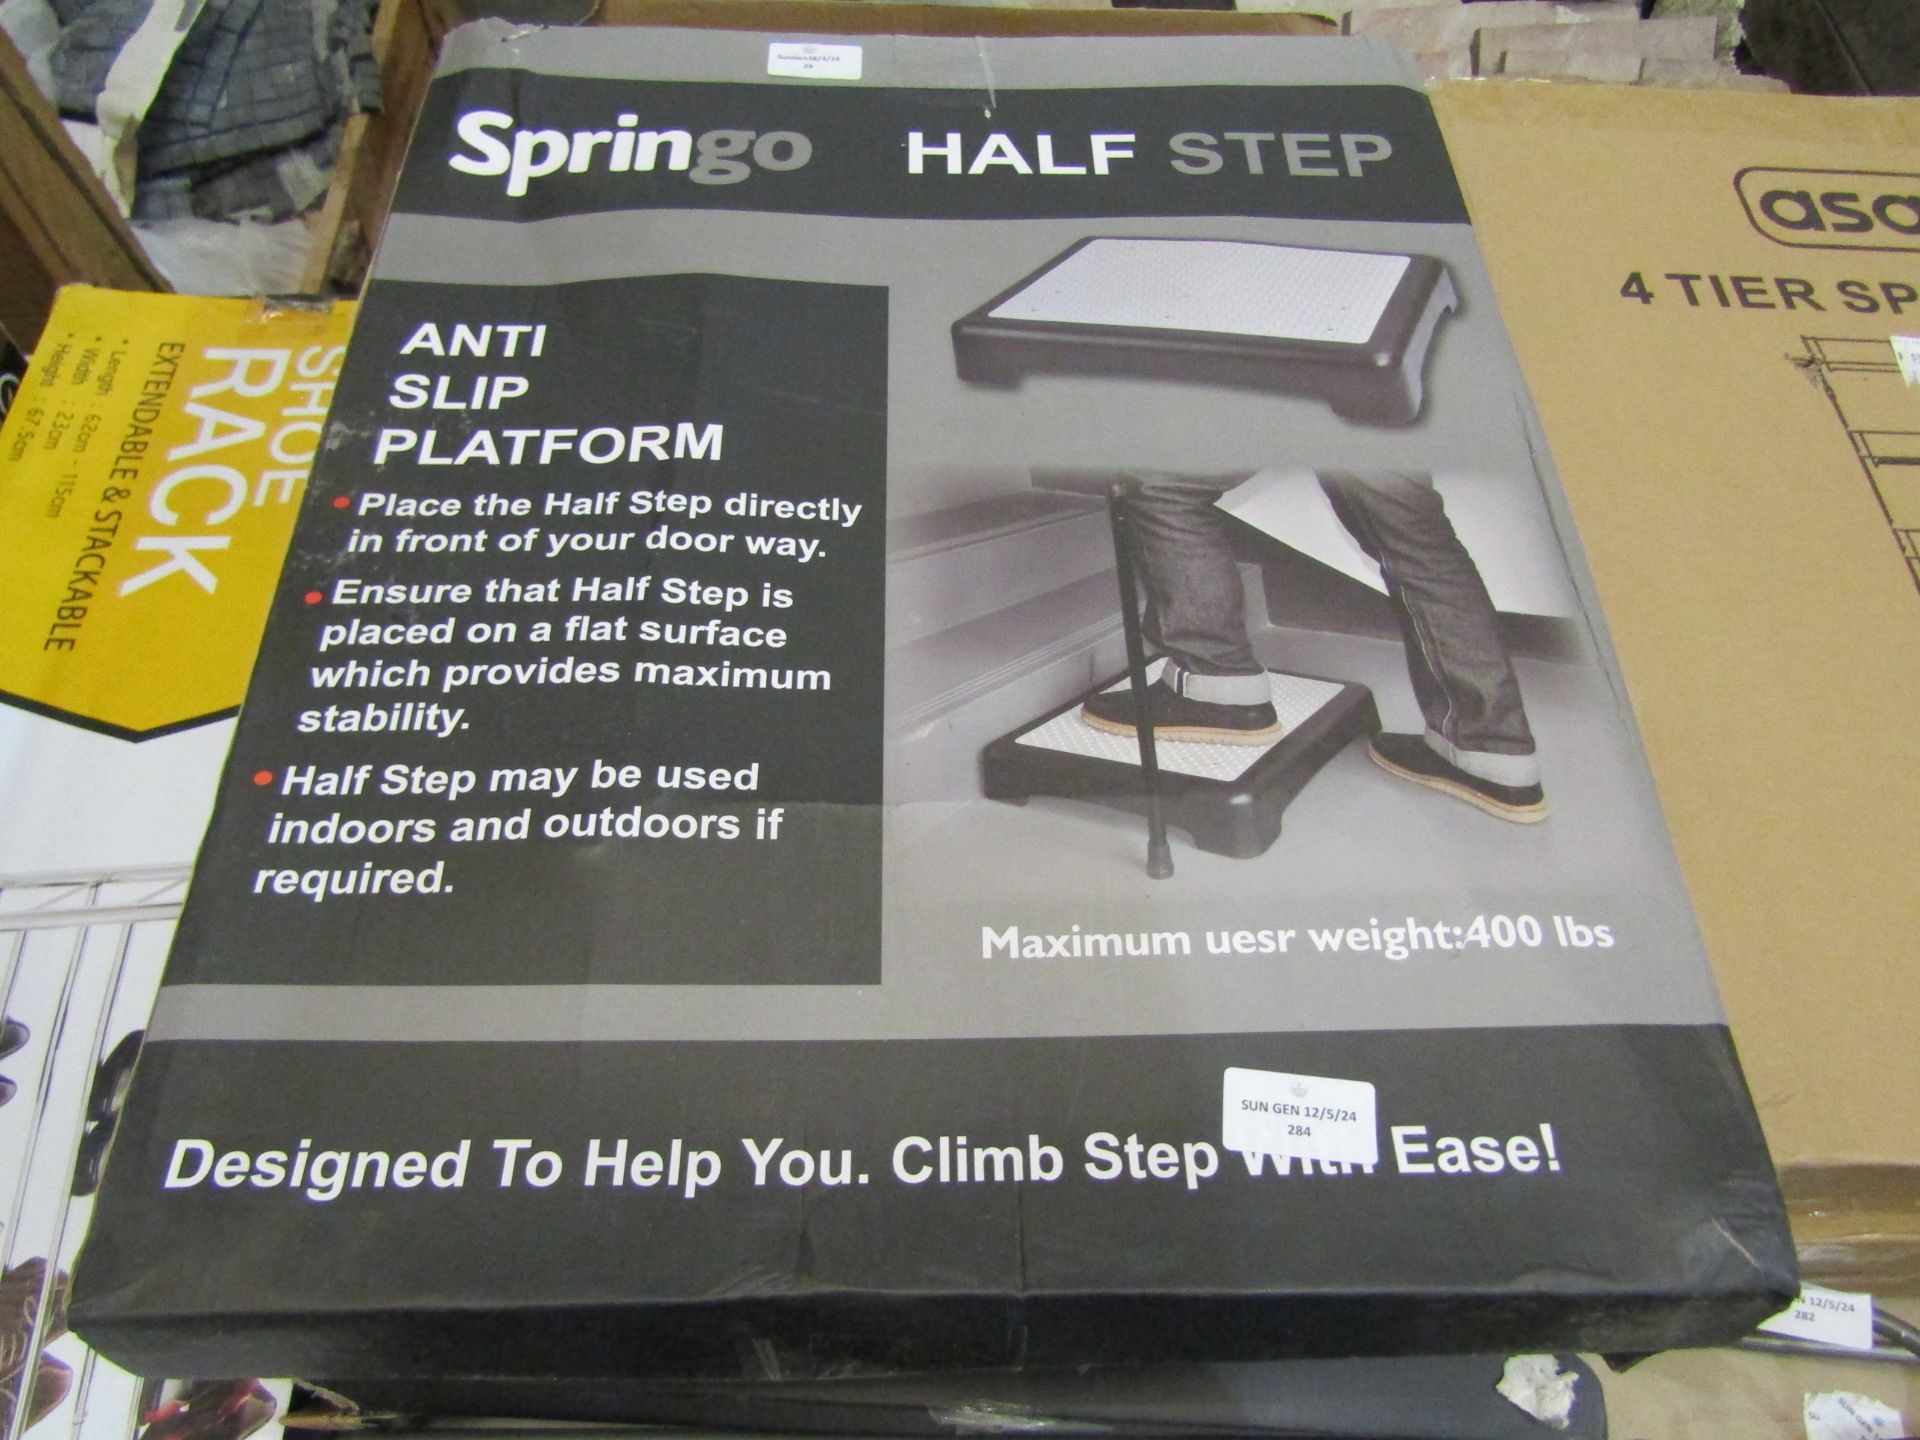 2x Springo Half Step With Anti Slip Platform - Both Unchecked & Boxed.